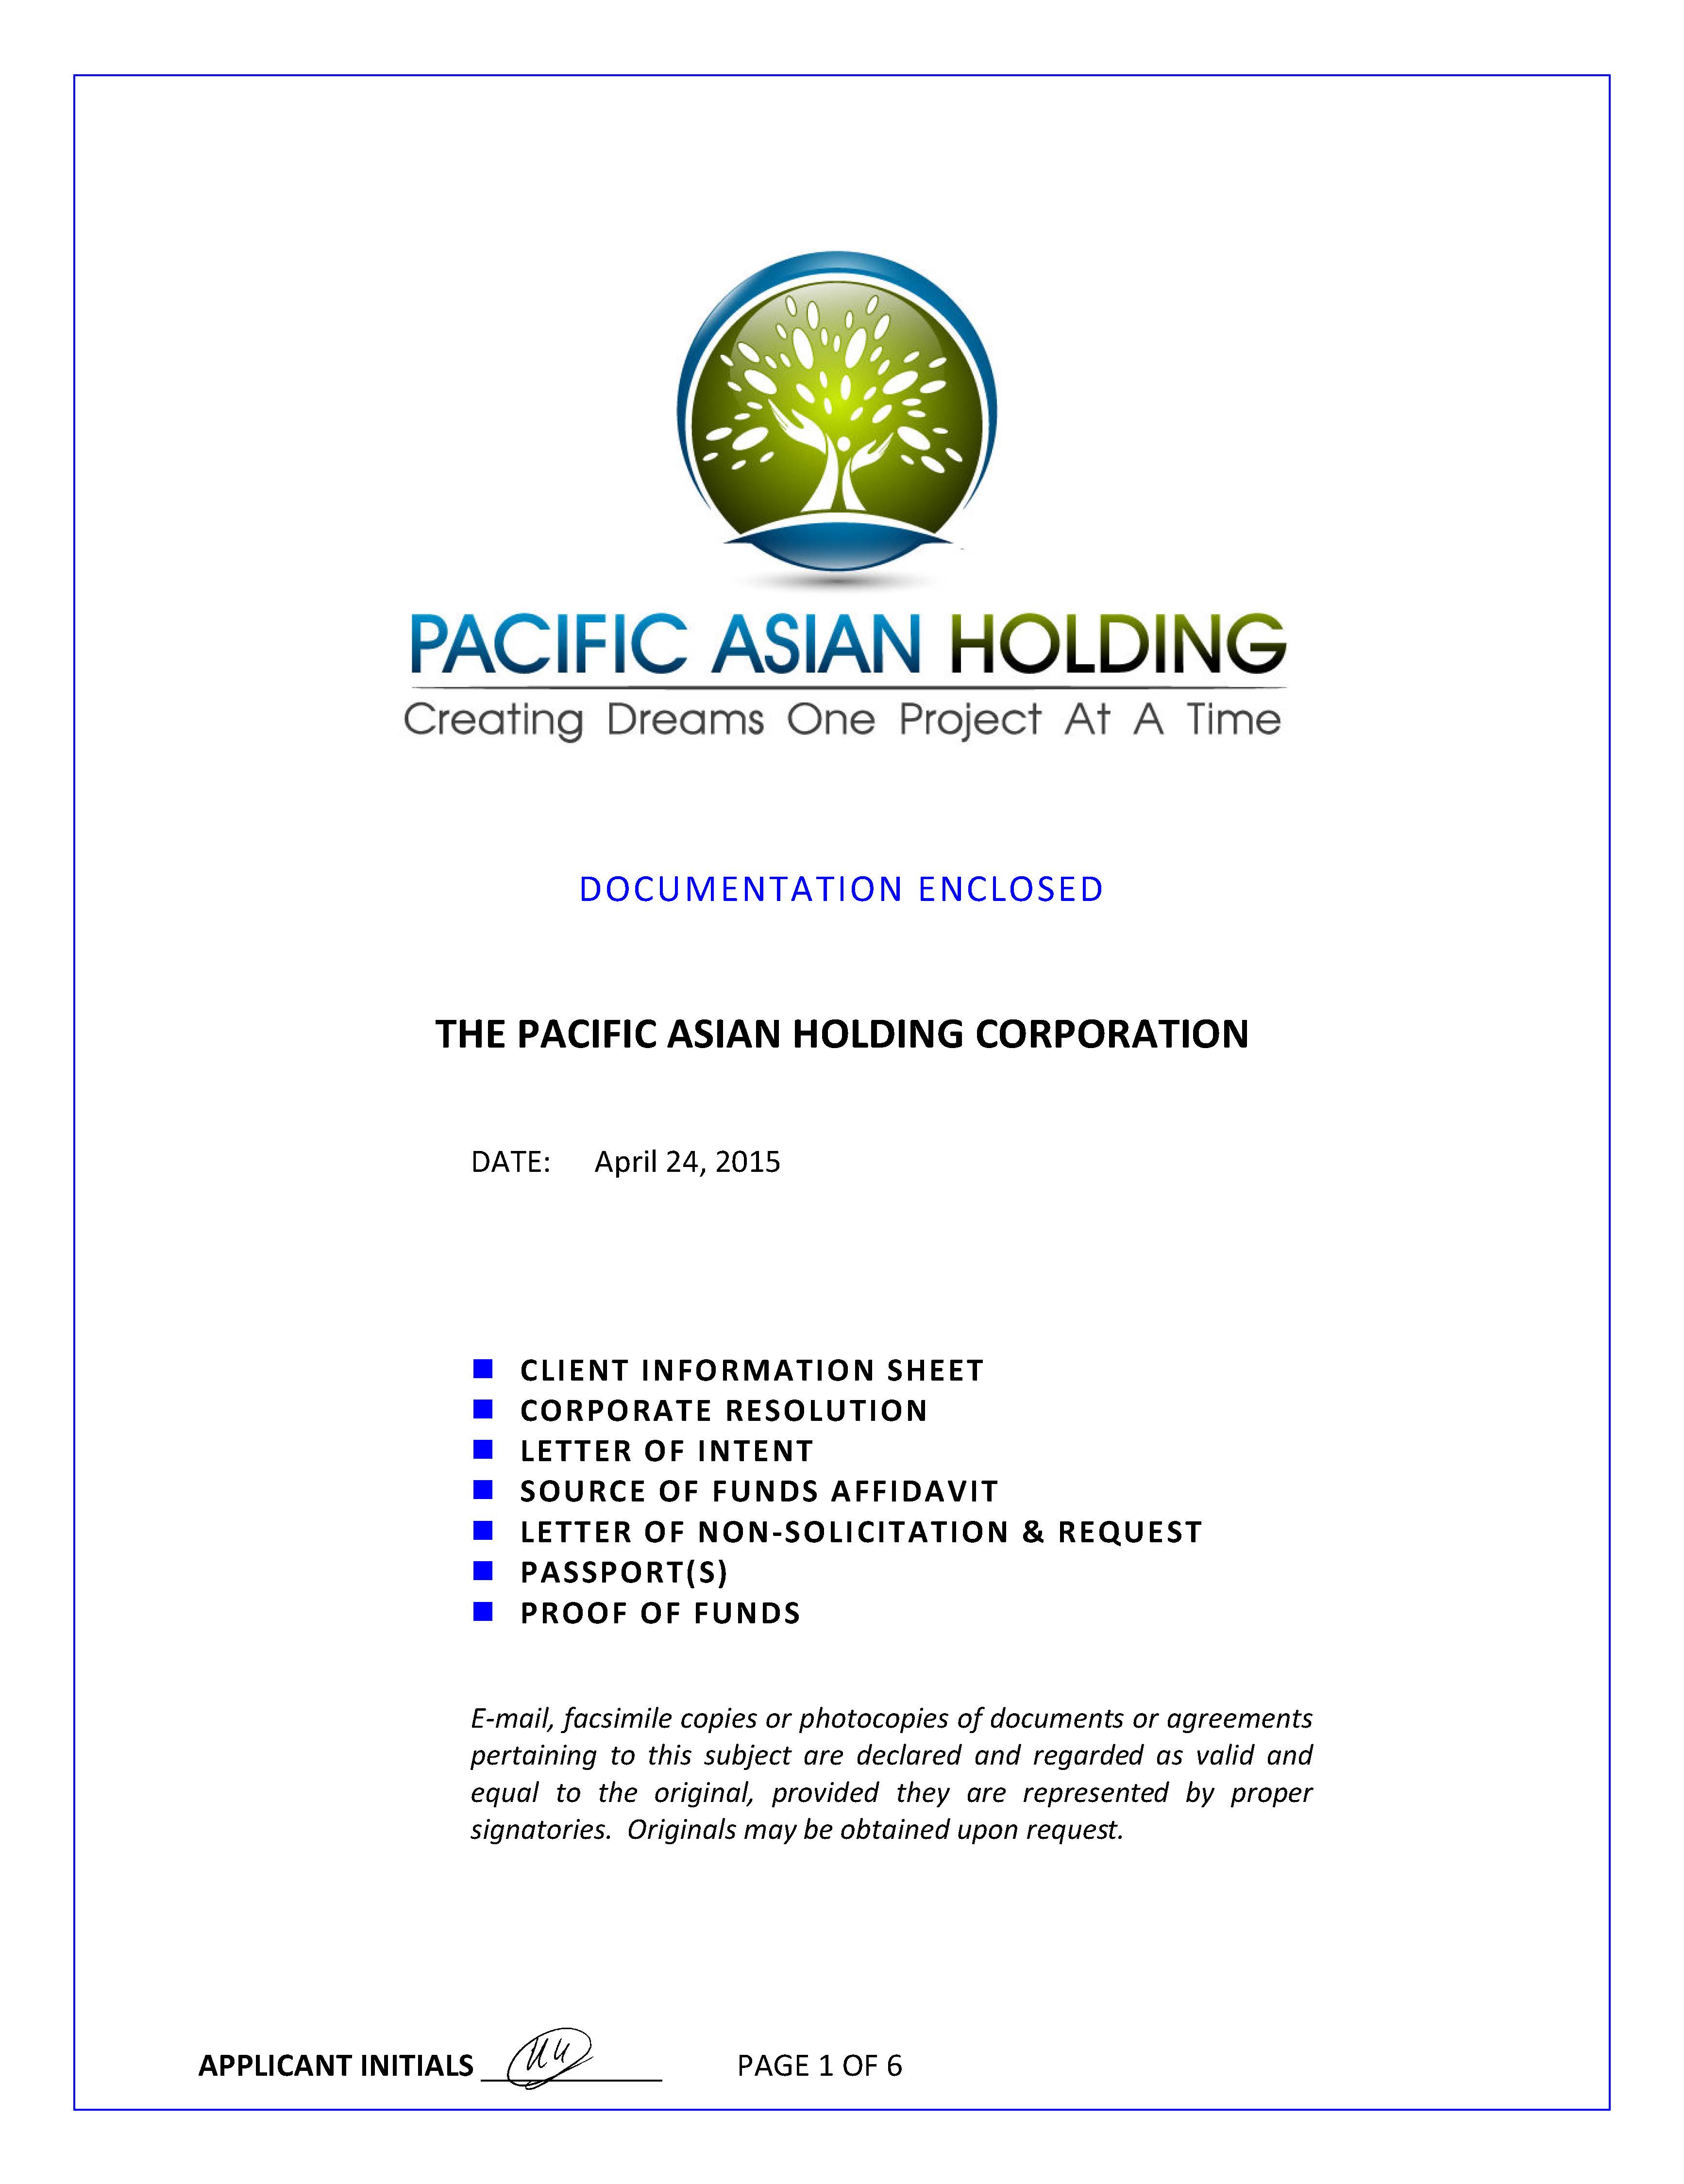 PAH Corp Info #1